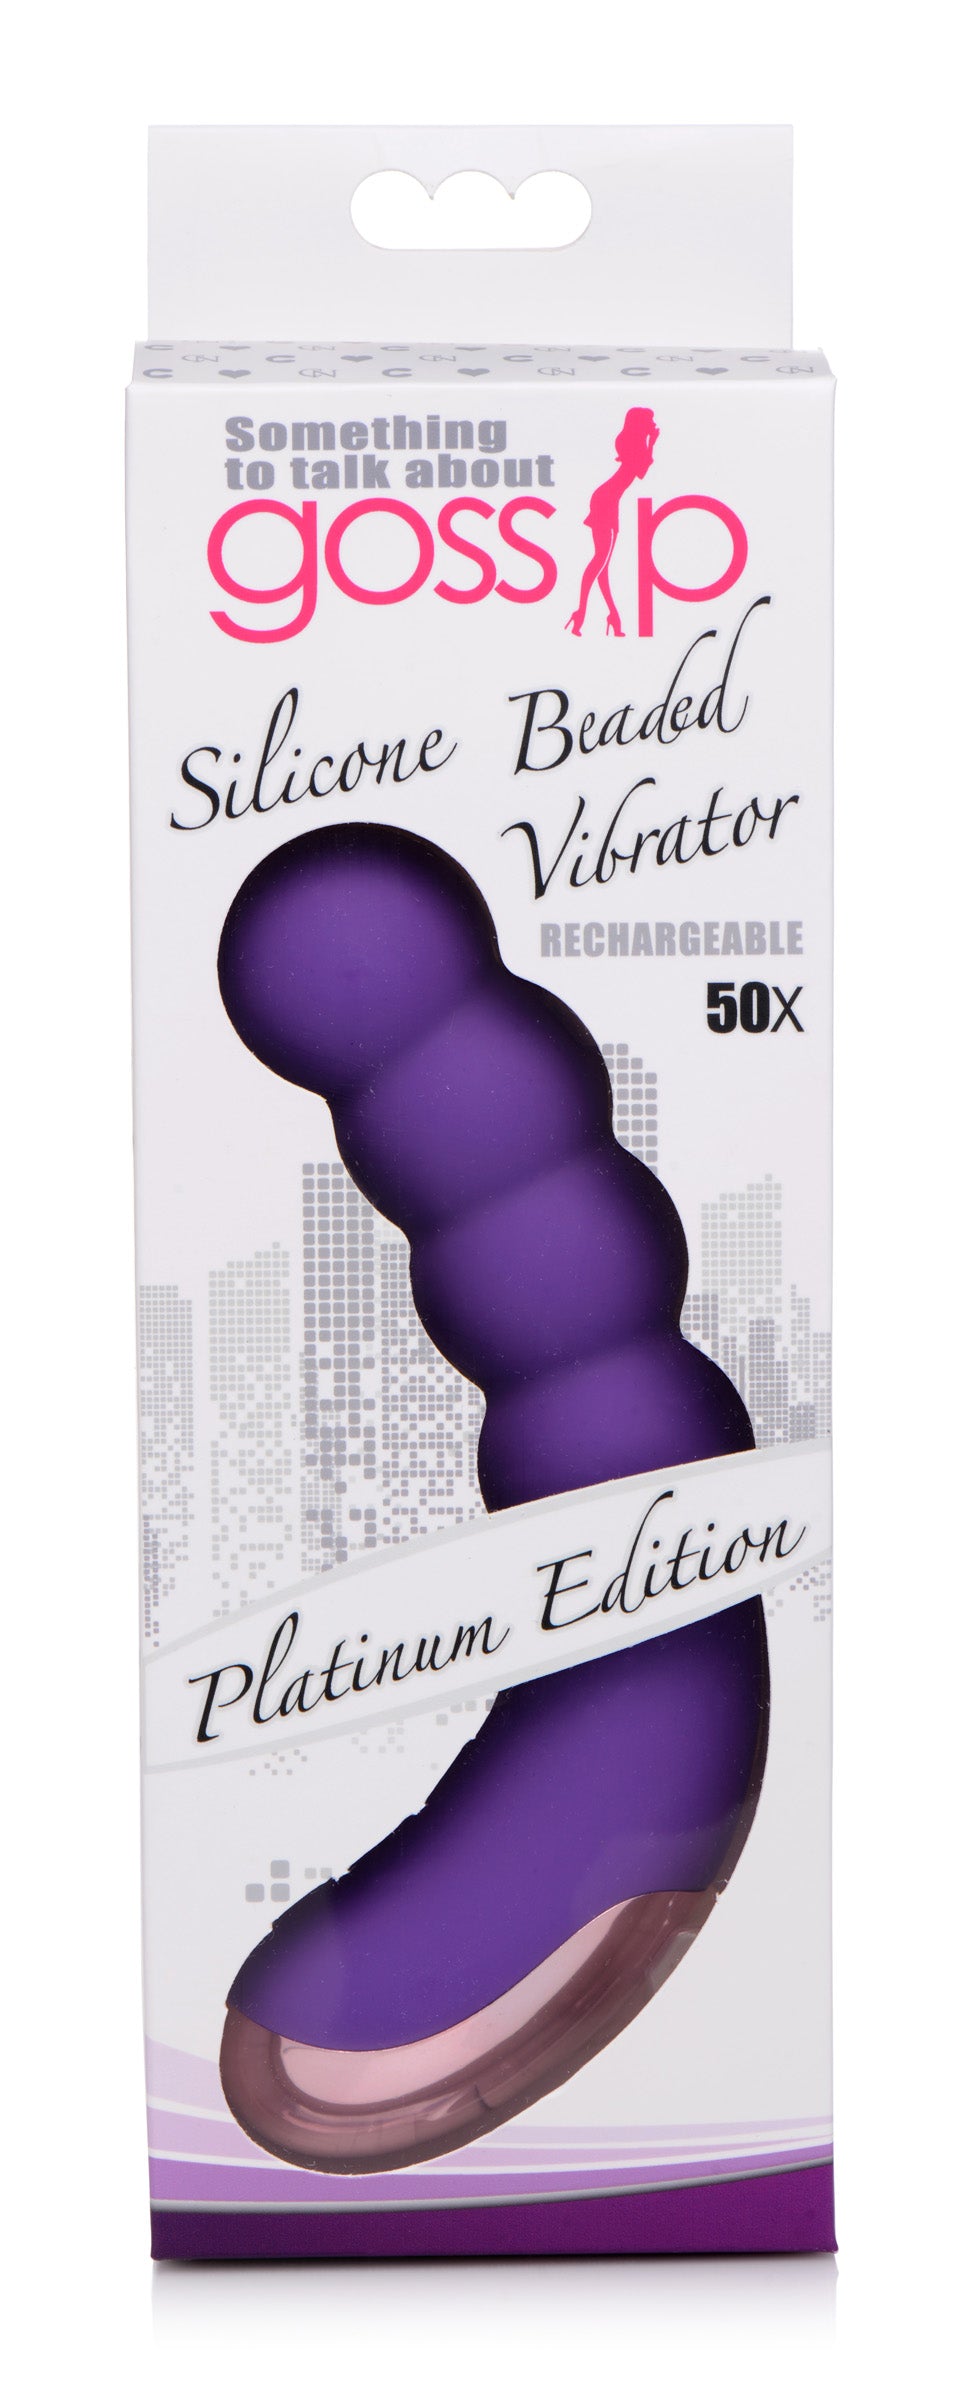 50X Silicone Beaded Vibrator - Purple - UABDSM